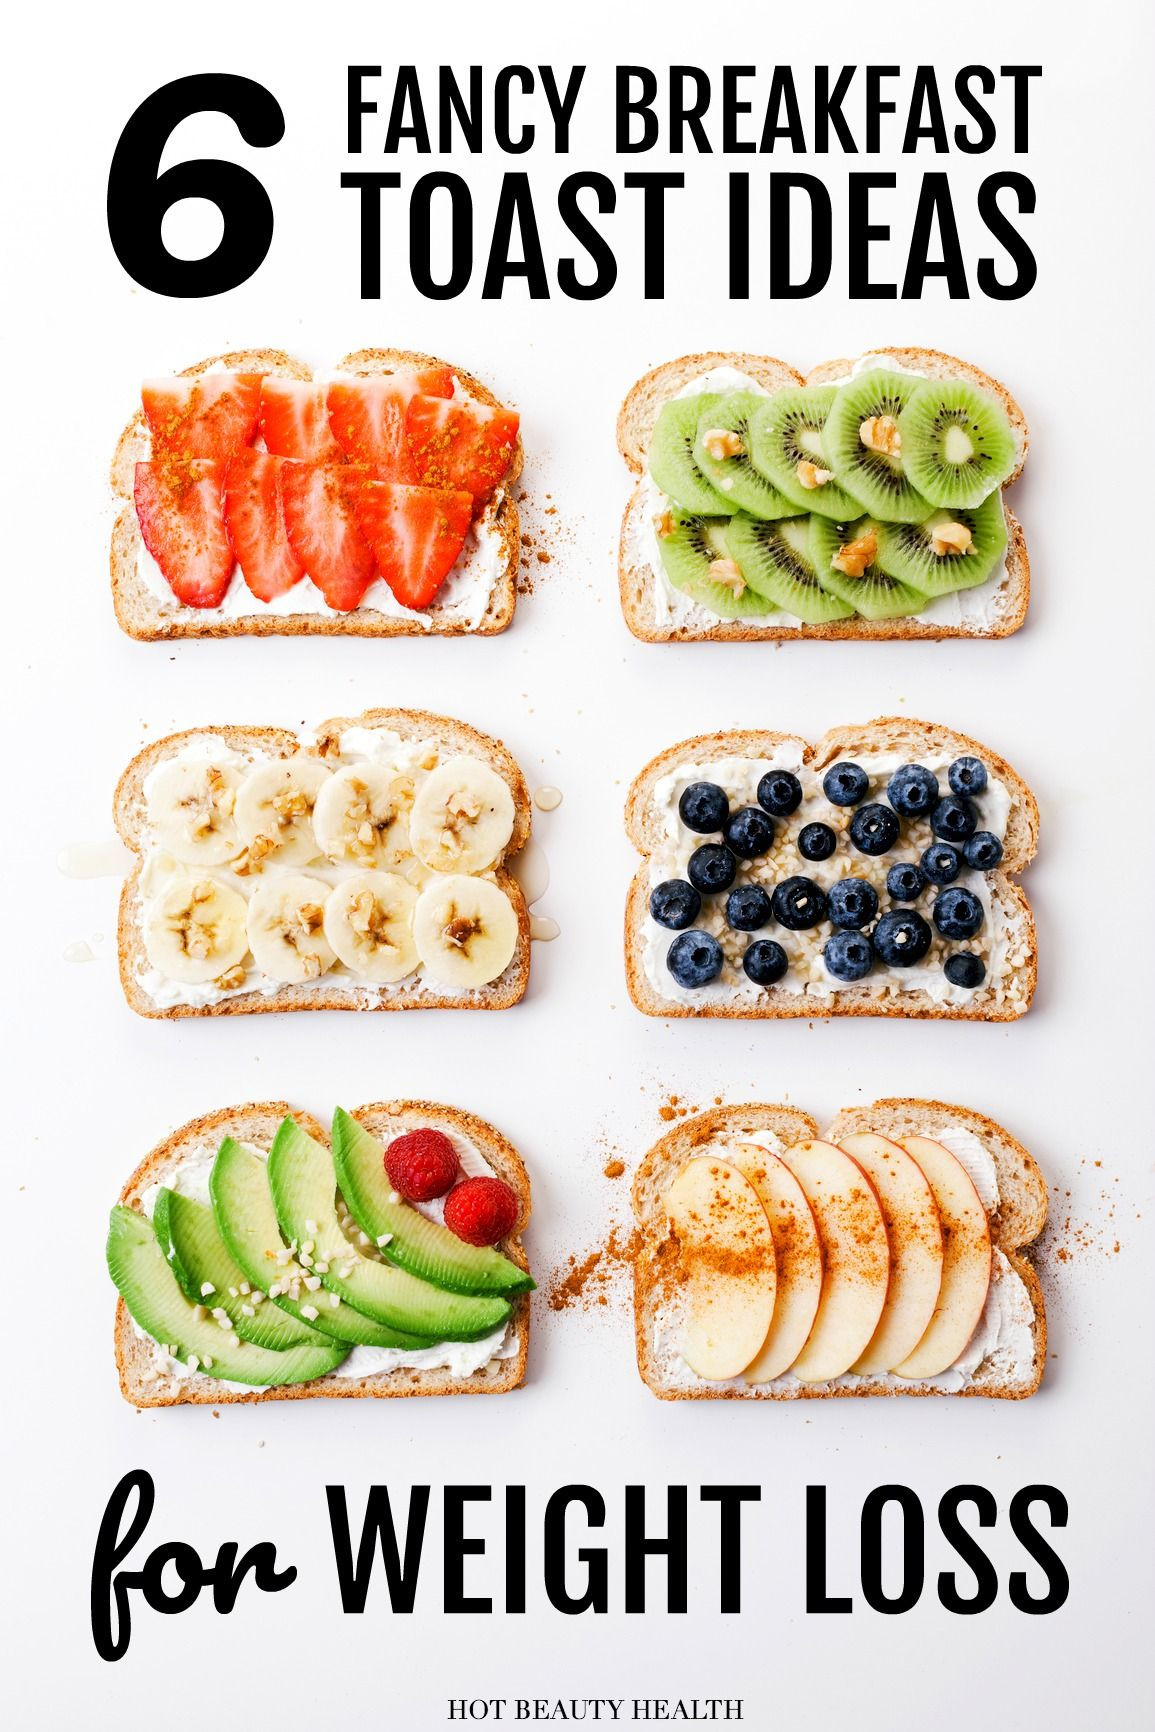 Quick Weight Loss Breakfast Ideas
 6 Easy & Creative Ways to Fancy Up Breakfast Toasts